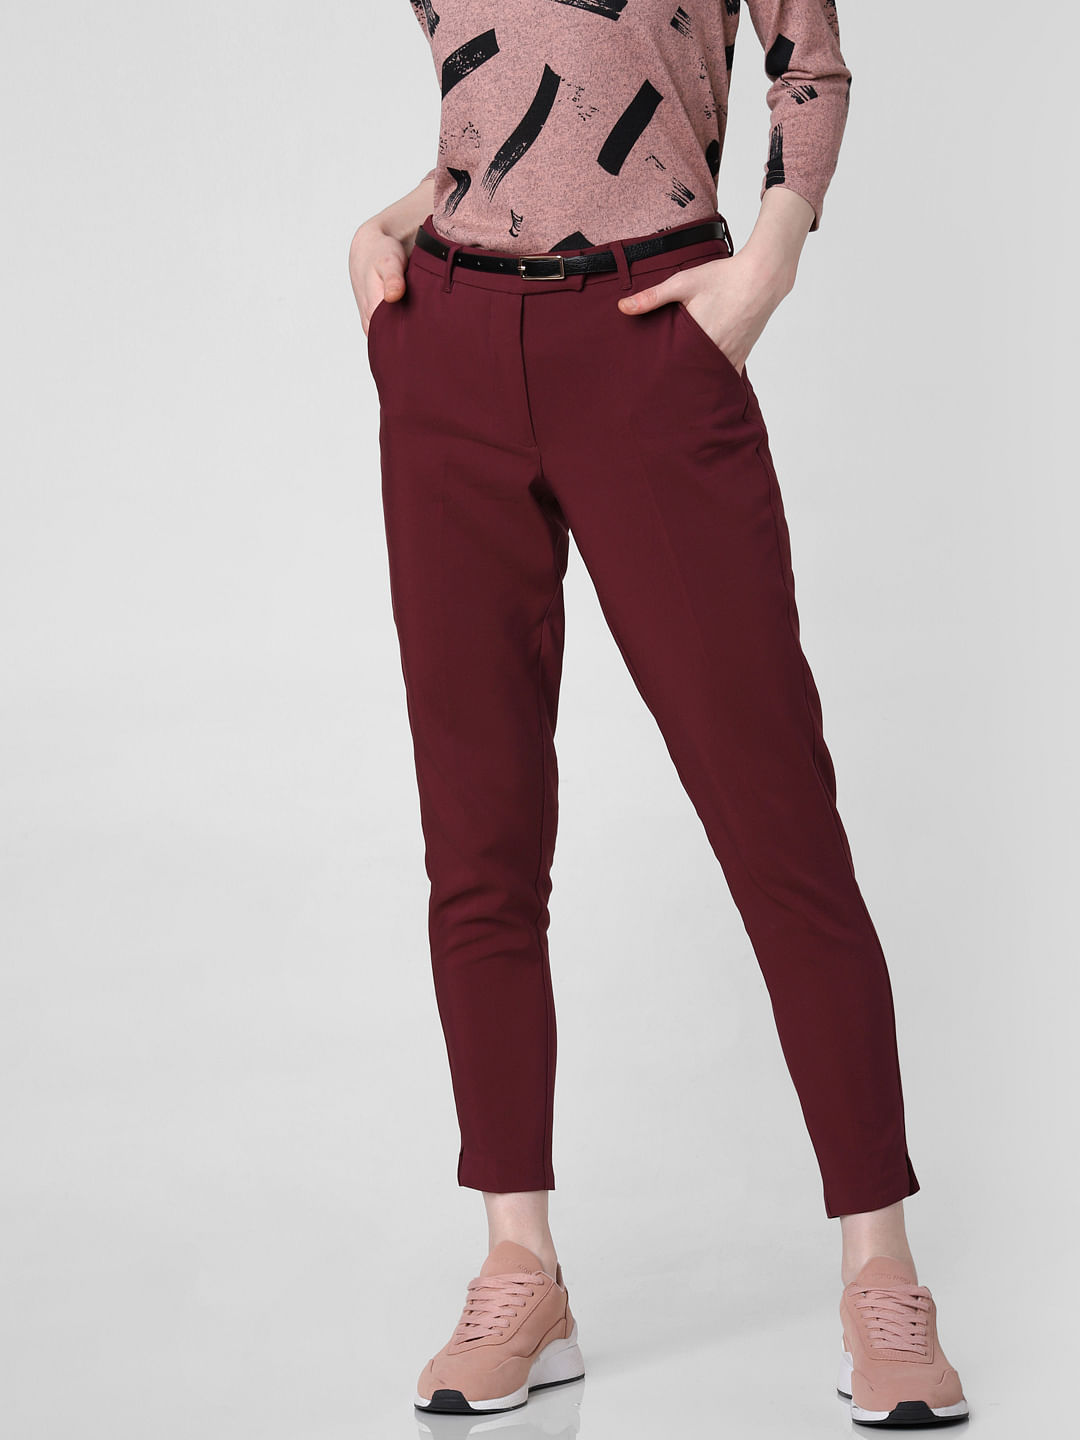 RUPA SOFTLINE Slim Fit Women Beige Trousers - Buy RUPA SOFTLINE Slim Fit  Women Beige Trousers Online at Best Prices in India | Flipkart.com